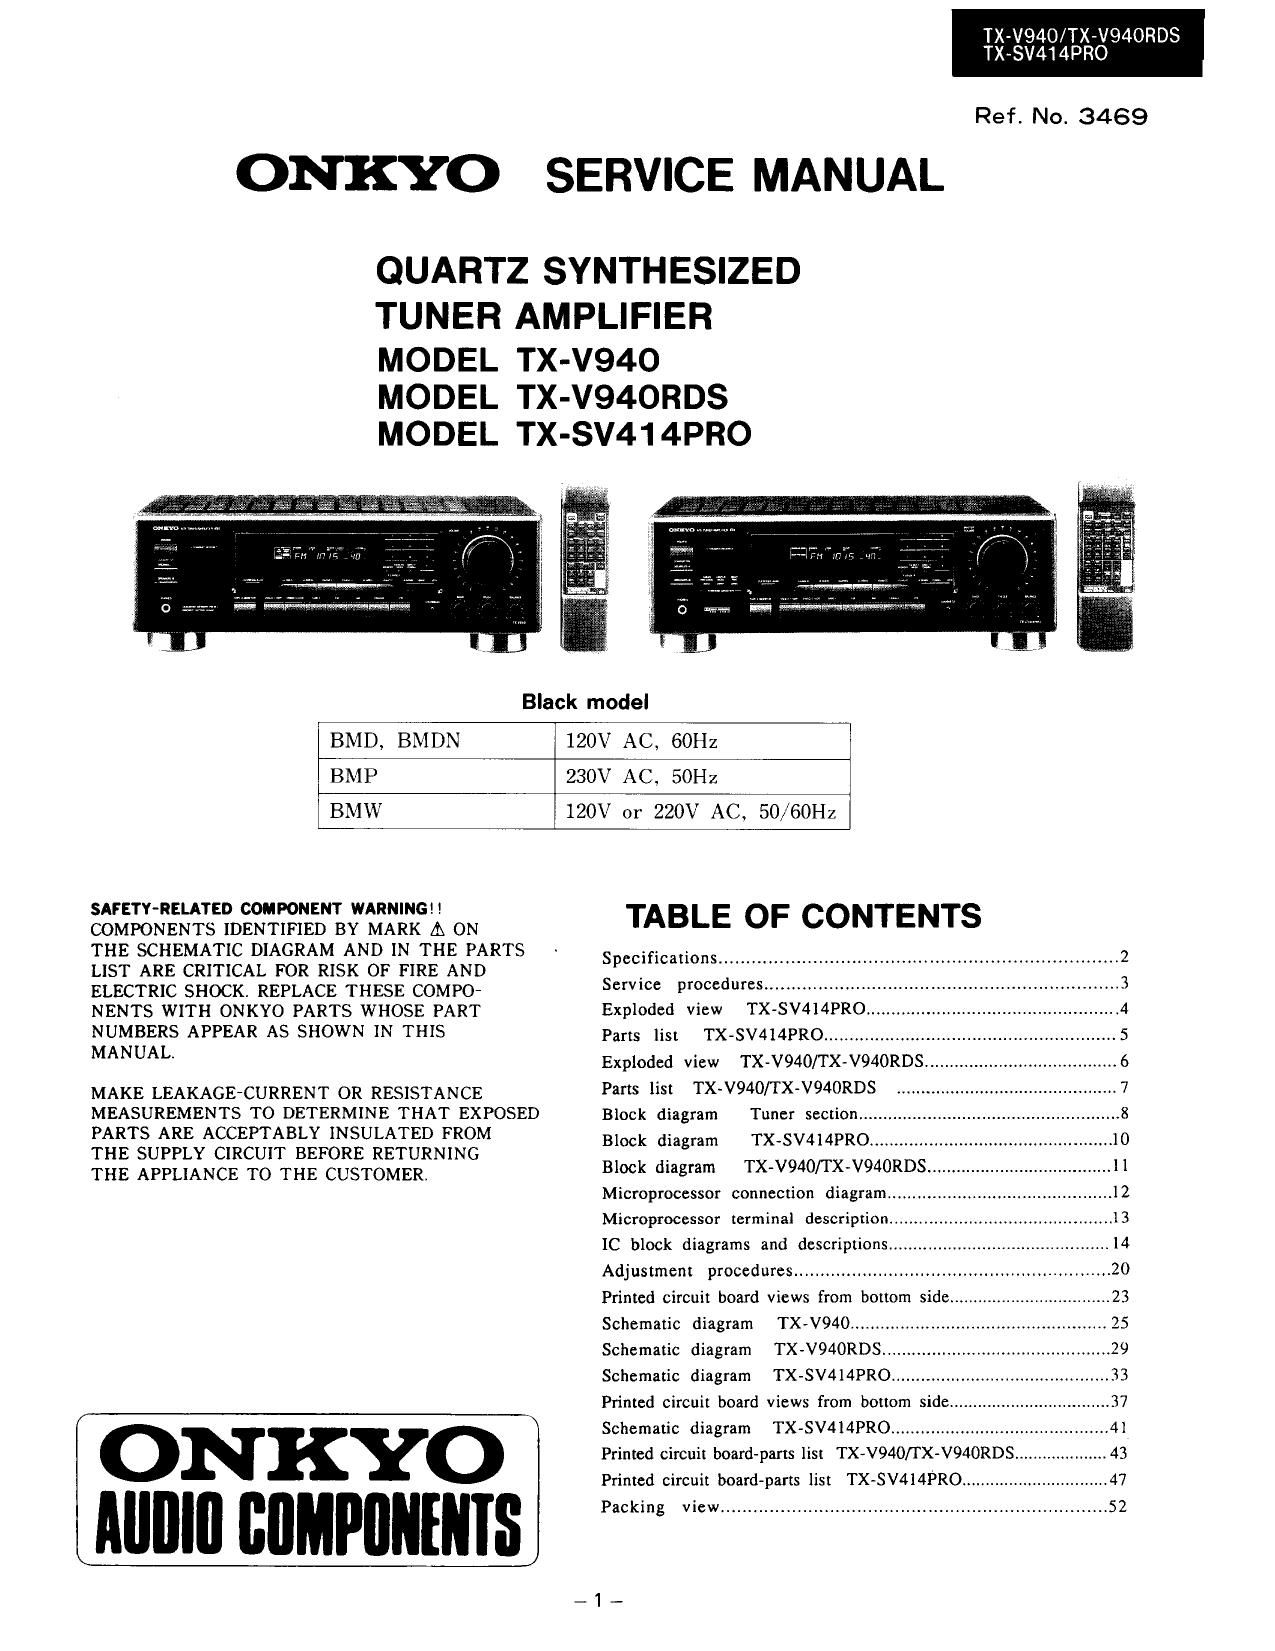 Onkyo TXV 940 Service Manual